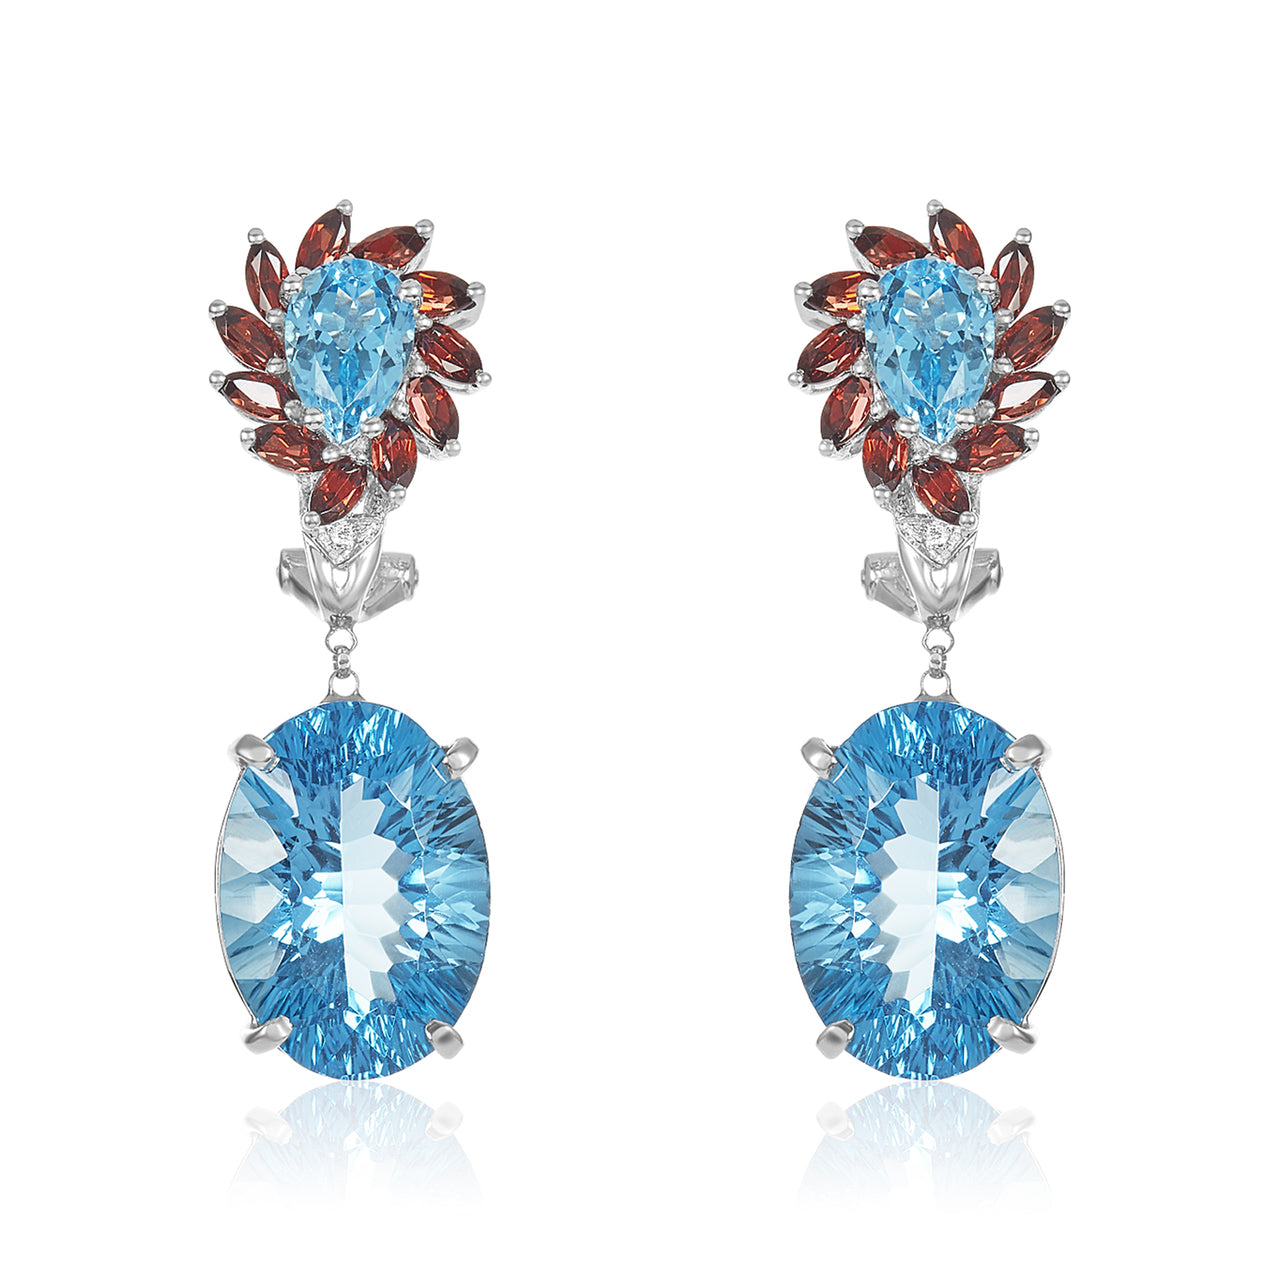 Blue Topaz, Garnet & Diamond Earrings